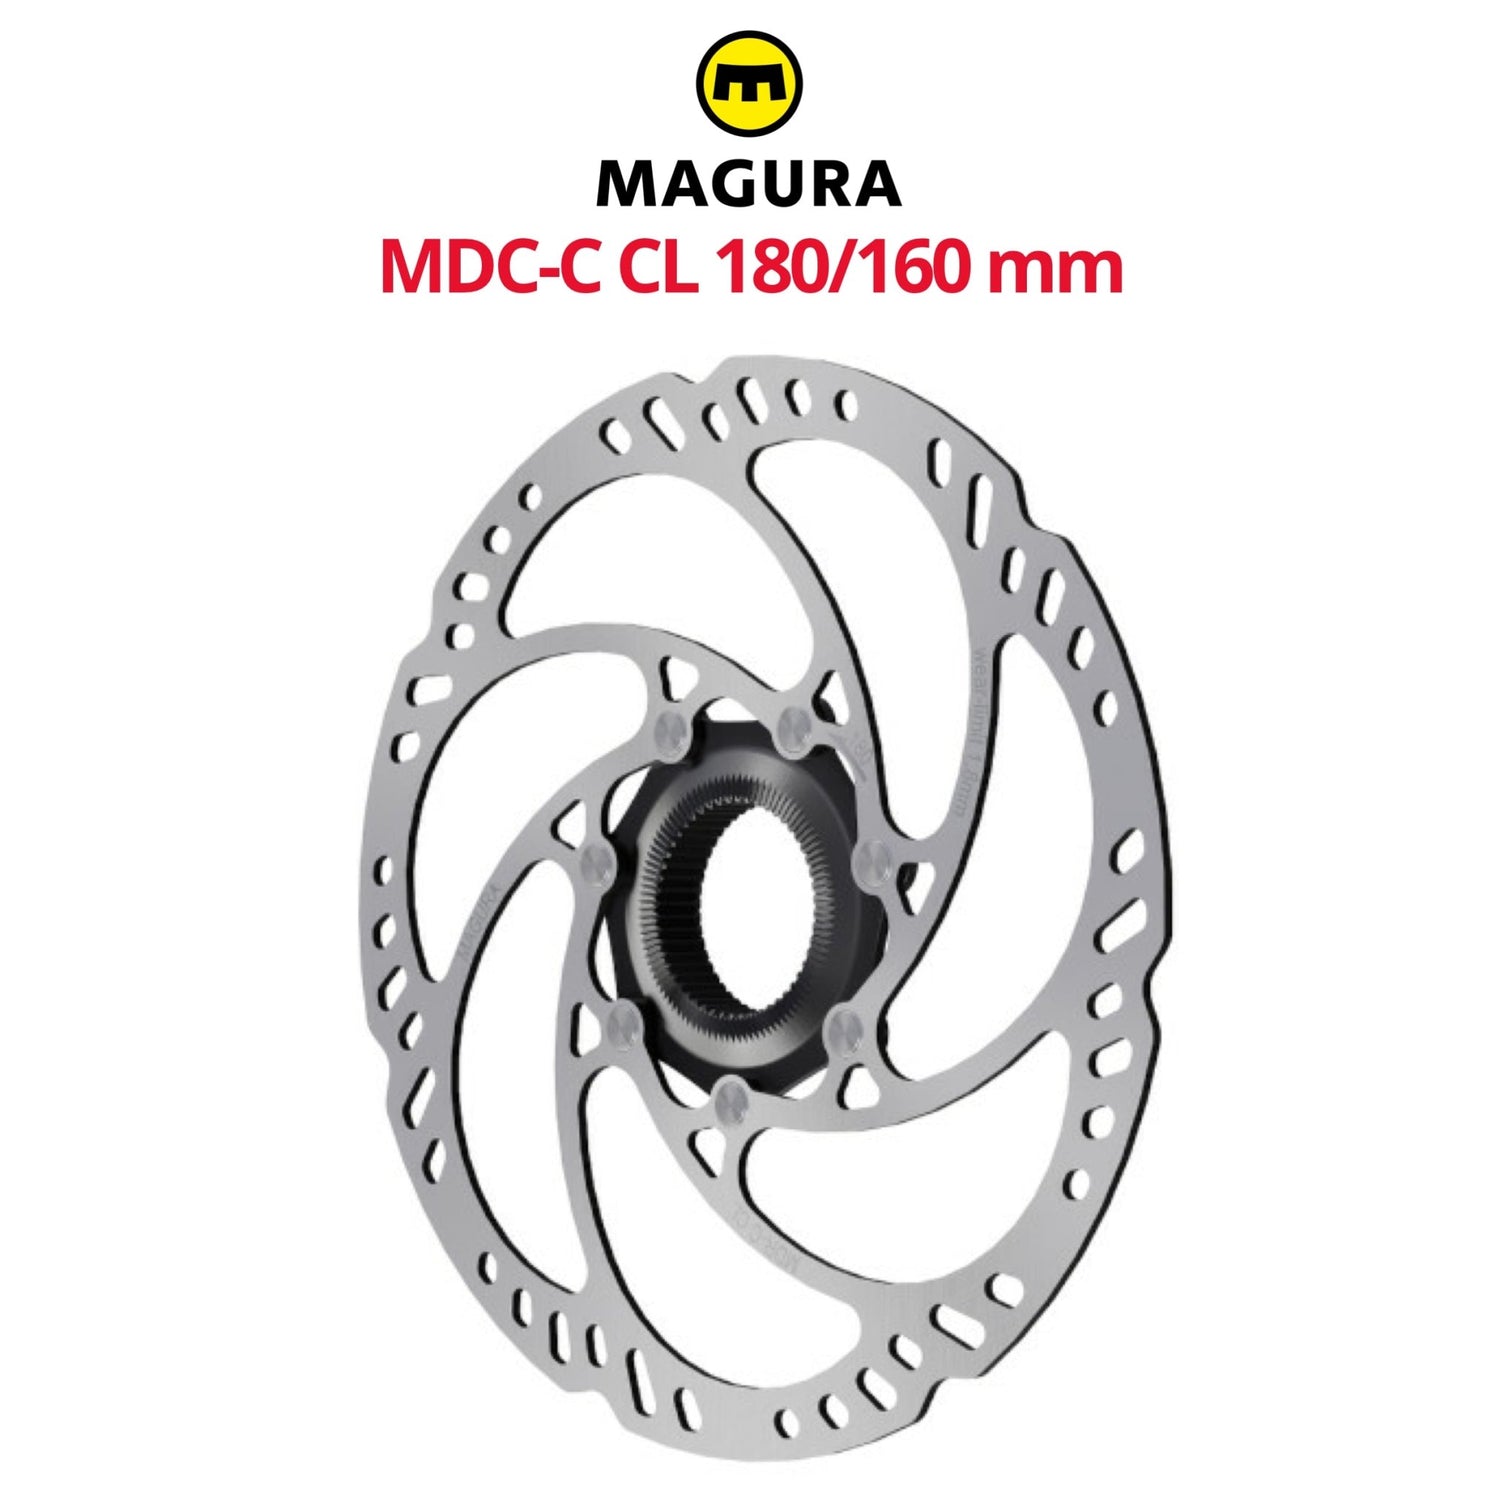 Magura MDR-C CL Center Lock Disc Brake Rotor - 160mm or 180mm